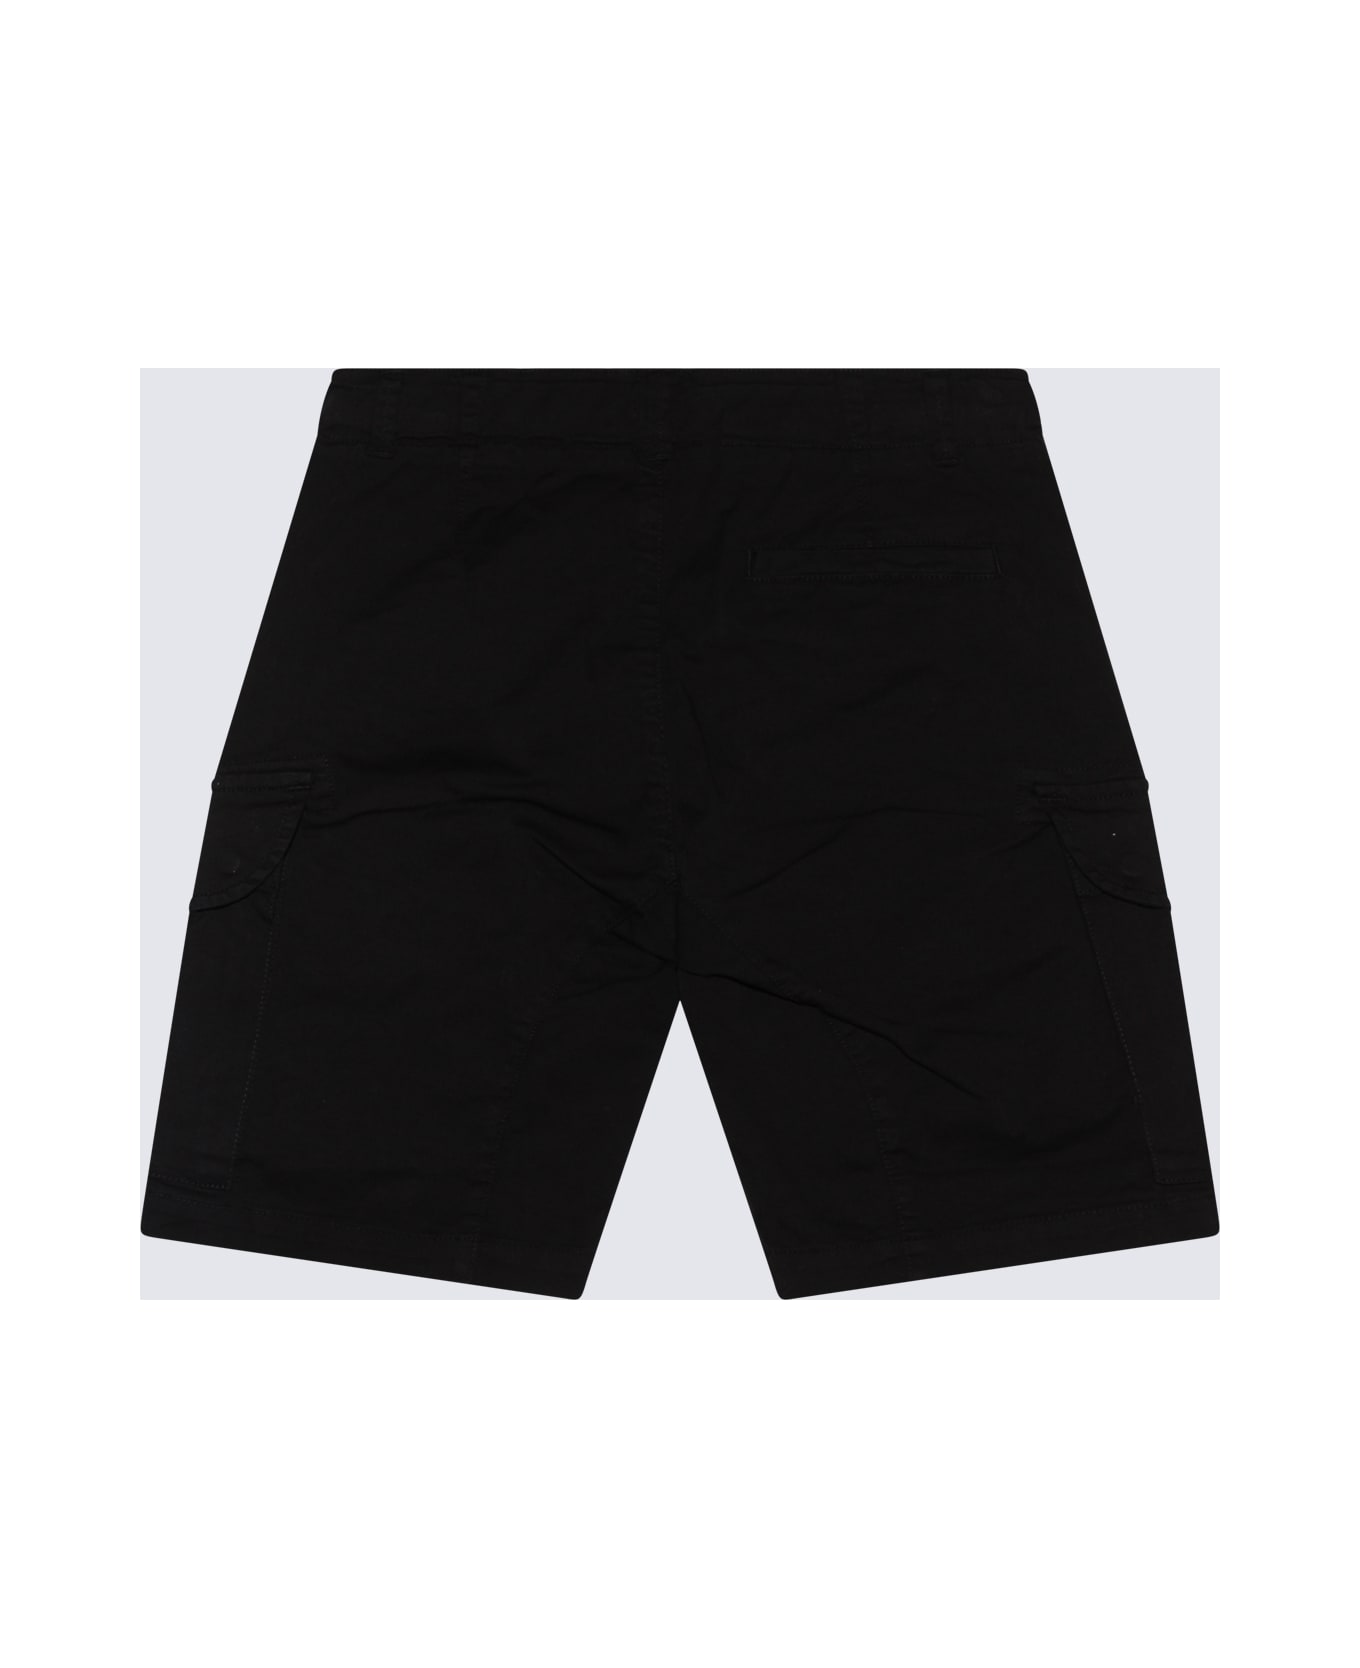 C.P. Company Black Cotton Shorts - NERO/BLACK